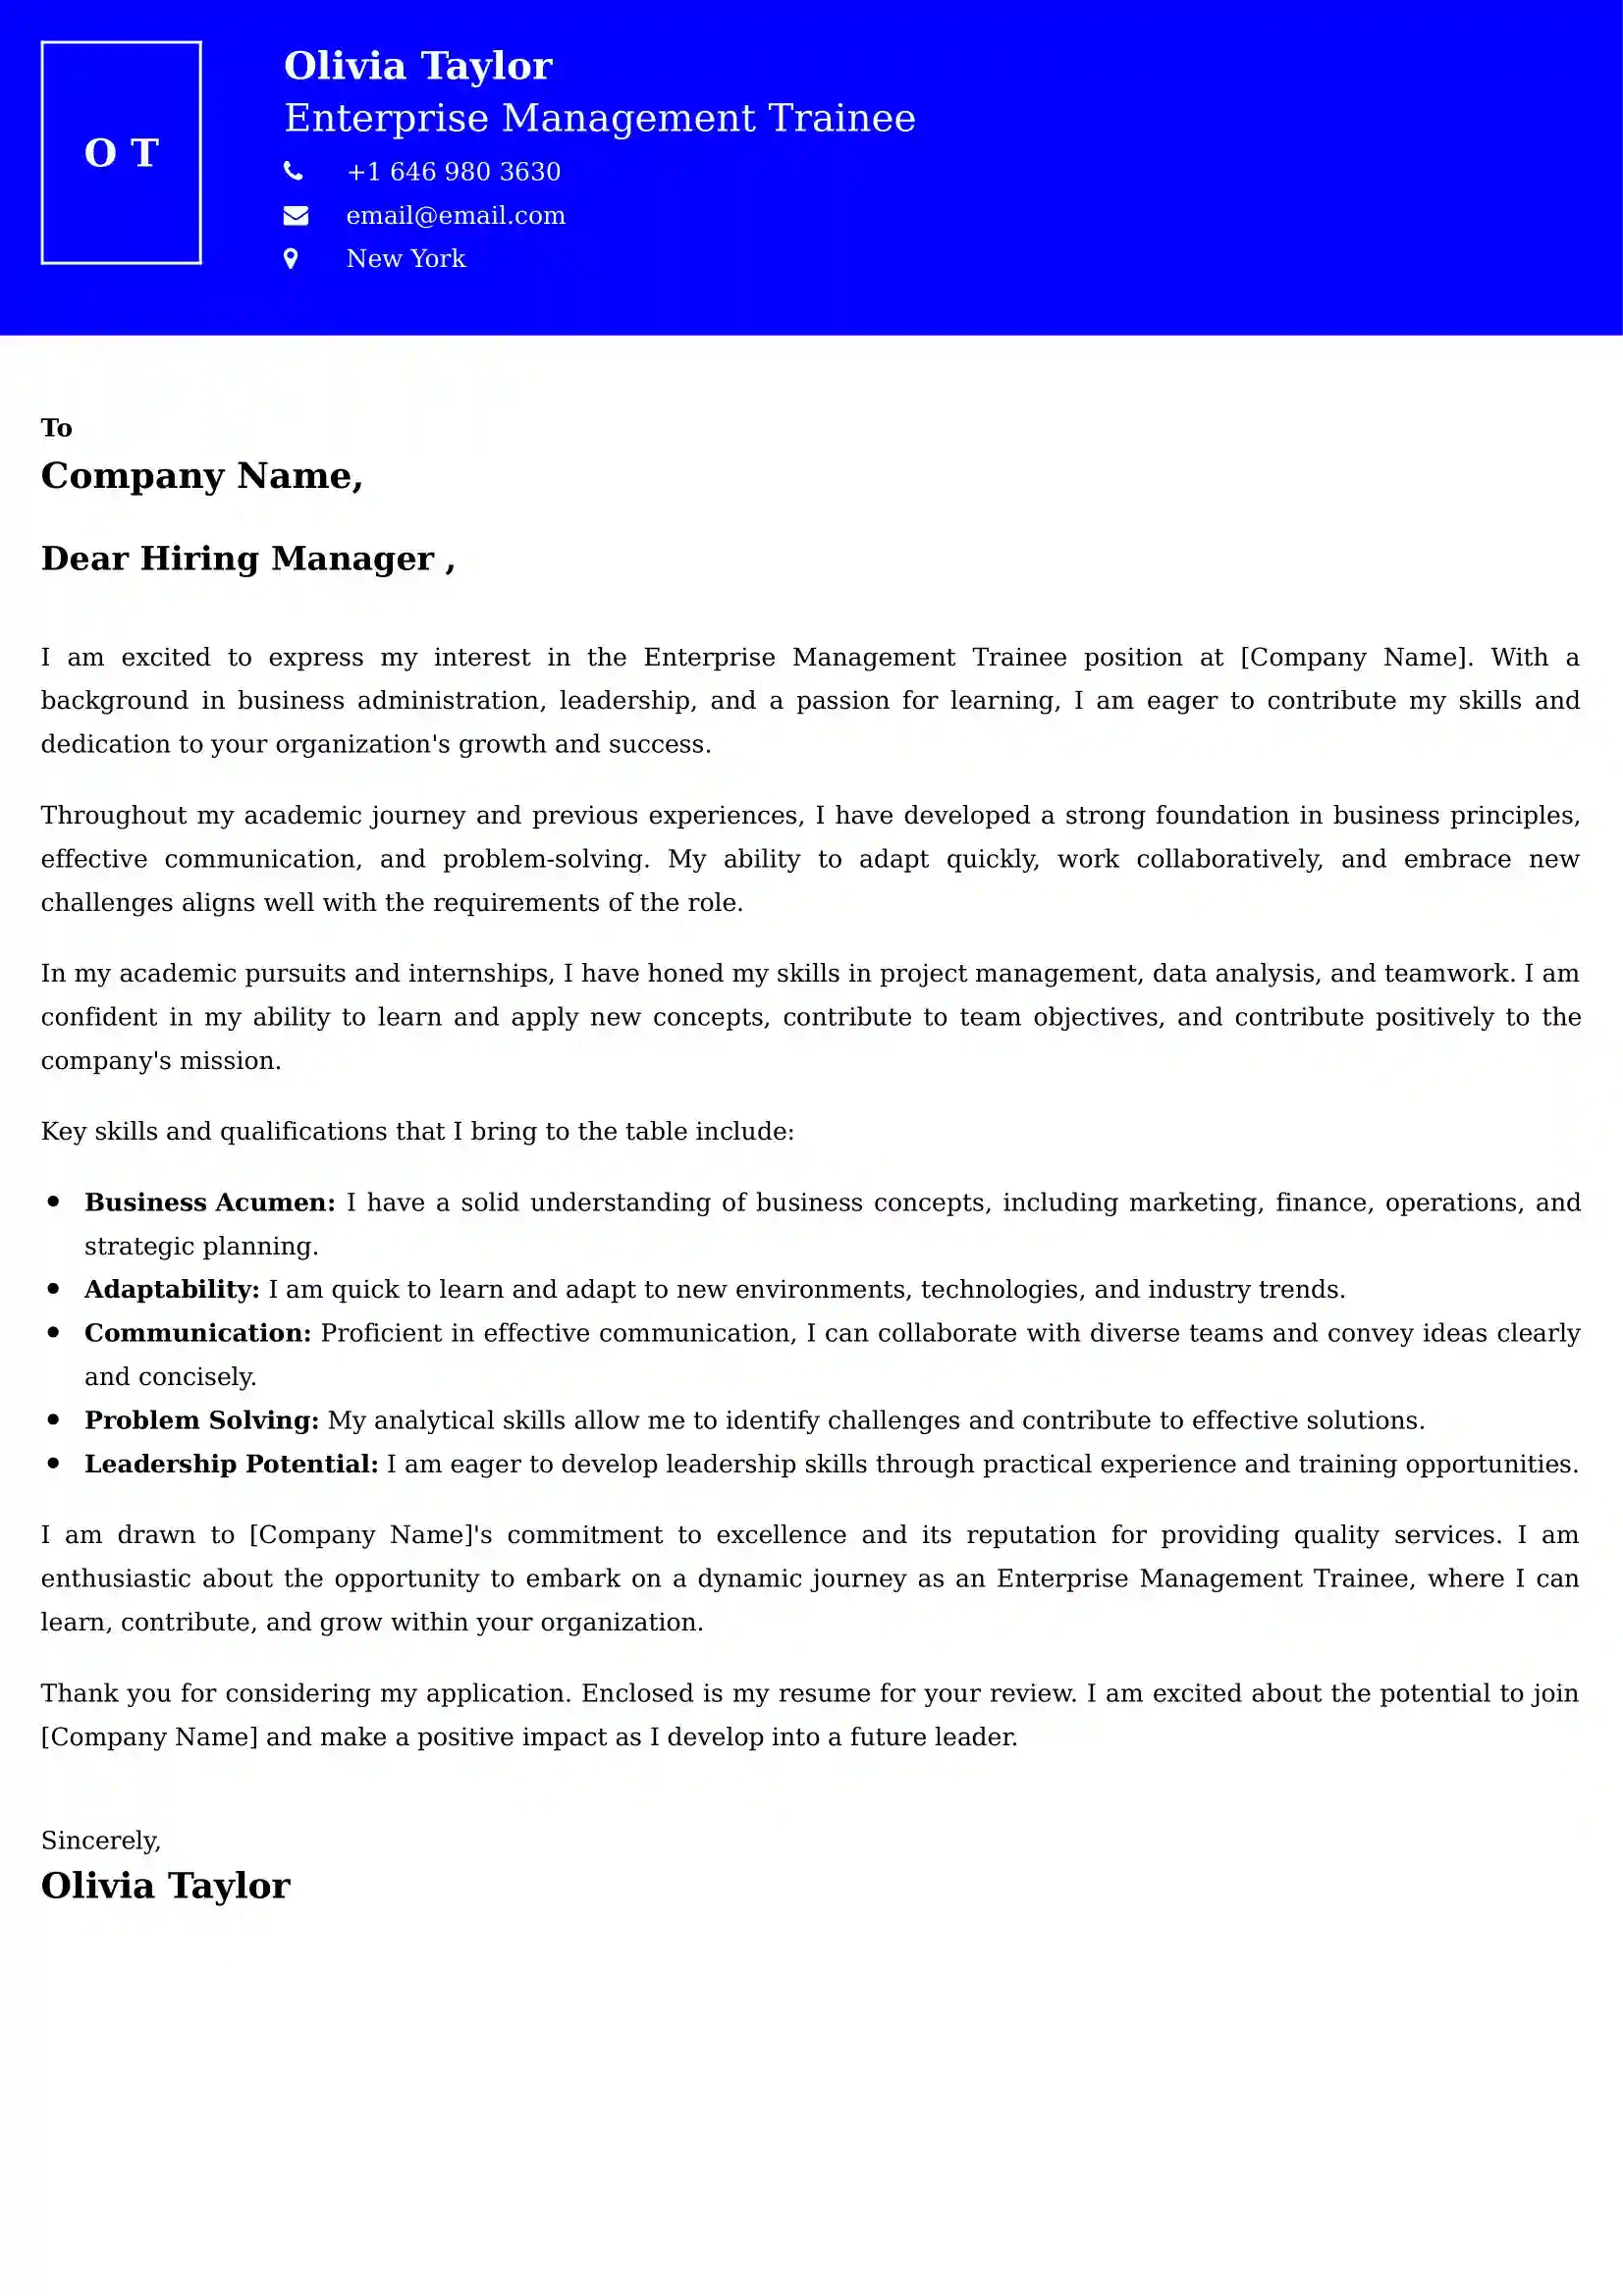 Enterprise Management Trainee Cover Letter Examples - Latest UK Format